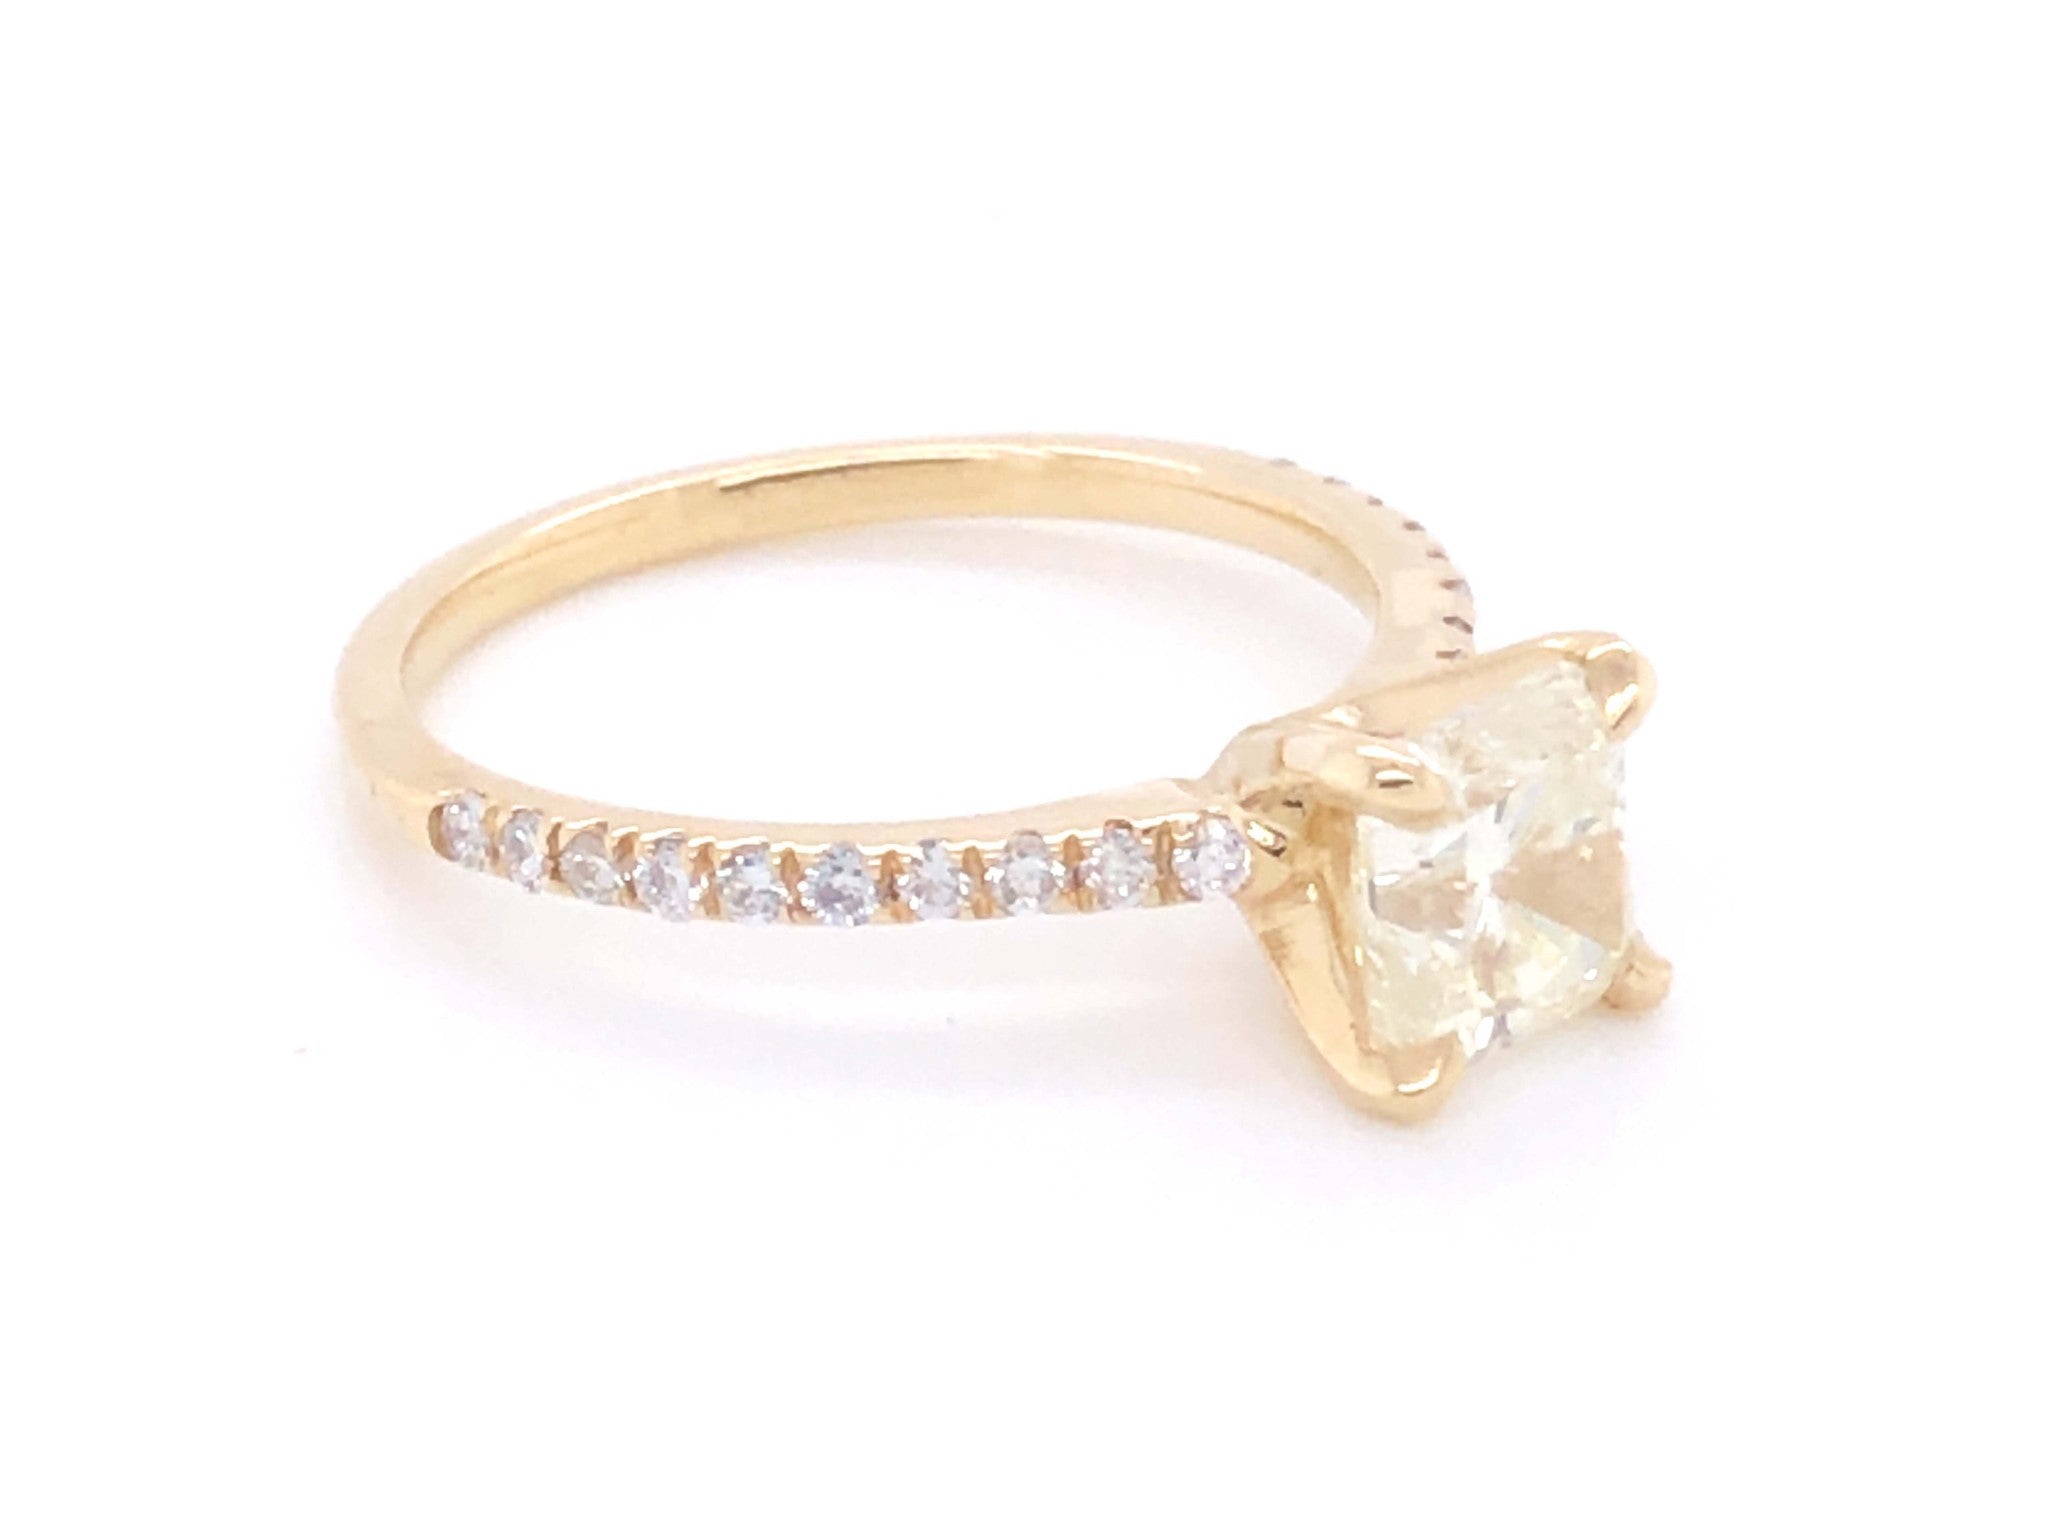 Radiant Cut 1.23 Carat Center Stone Diamond Engagement Ring - 14k Yellow Gold.